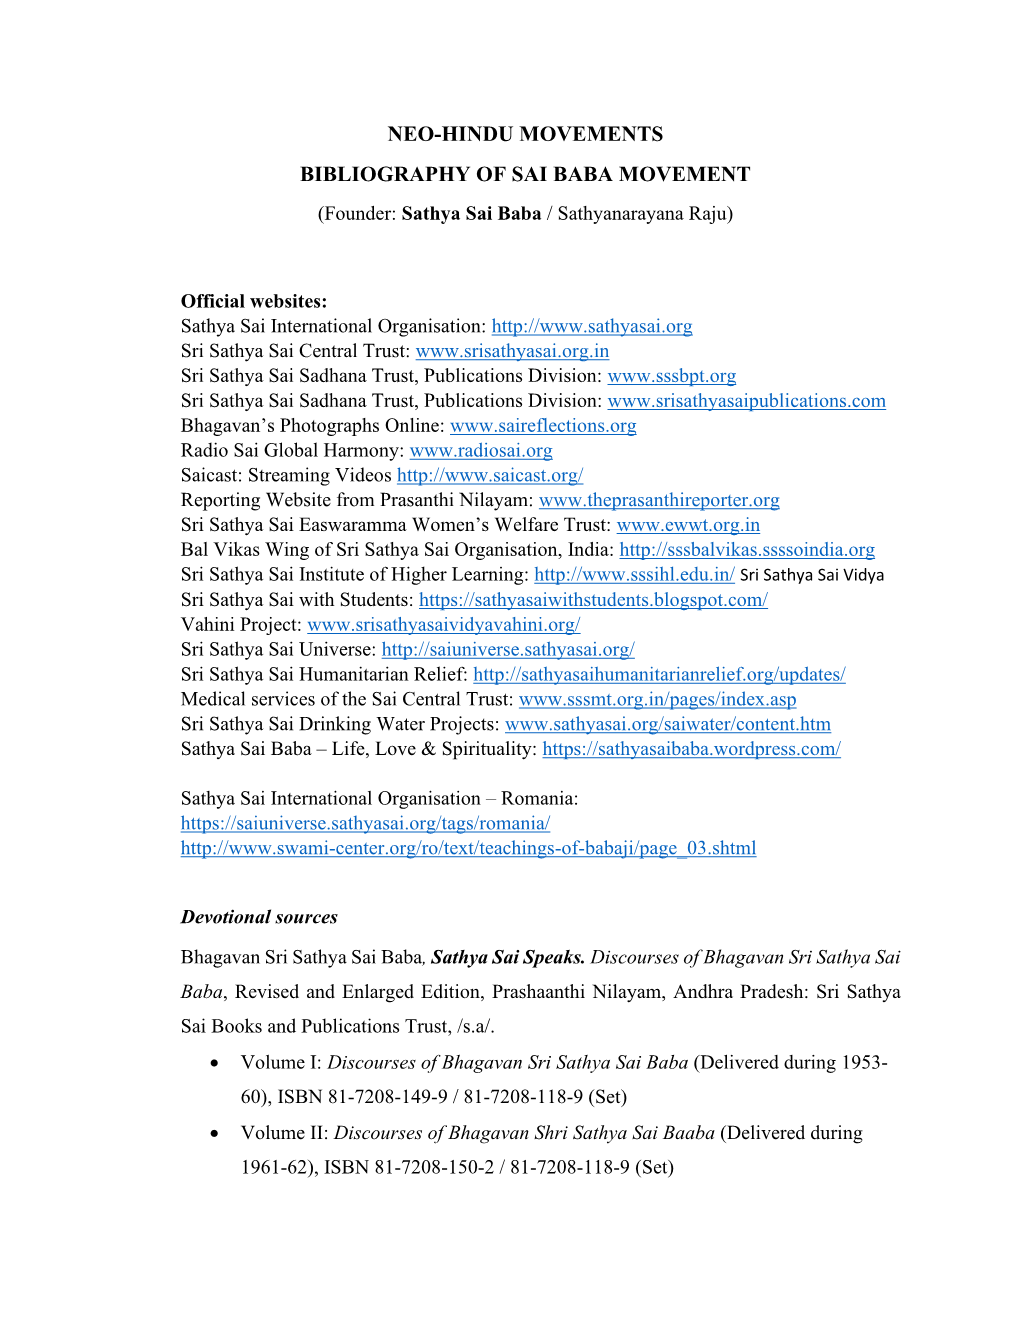 Neo-Hindu Movements Bibliography of Sai Baba Movement